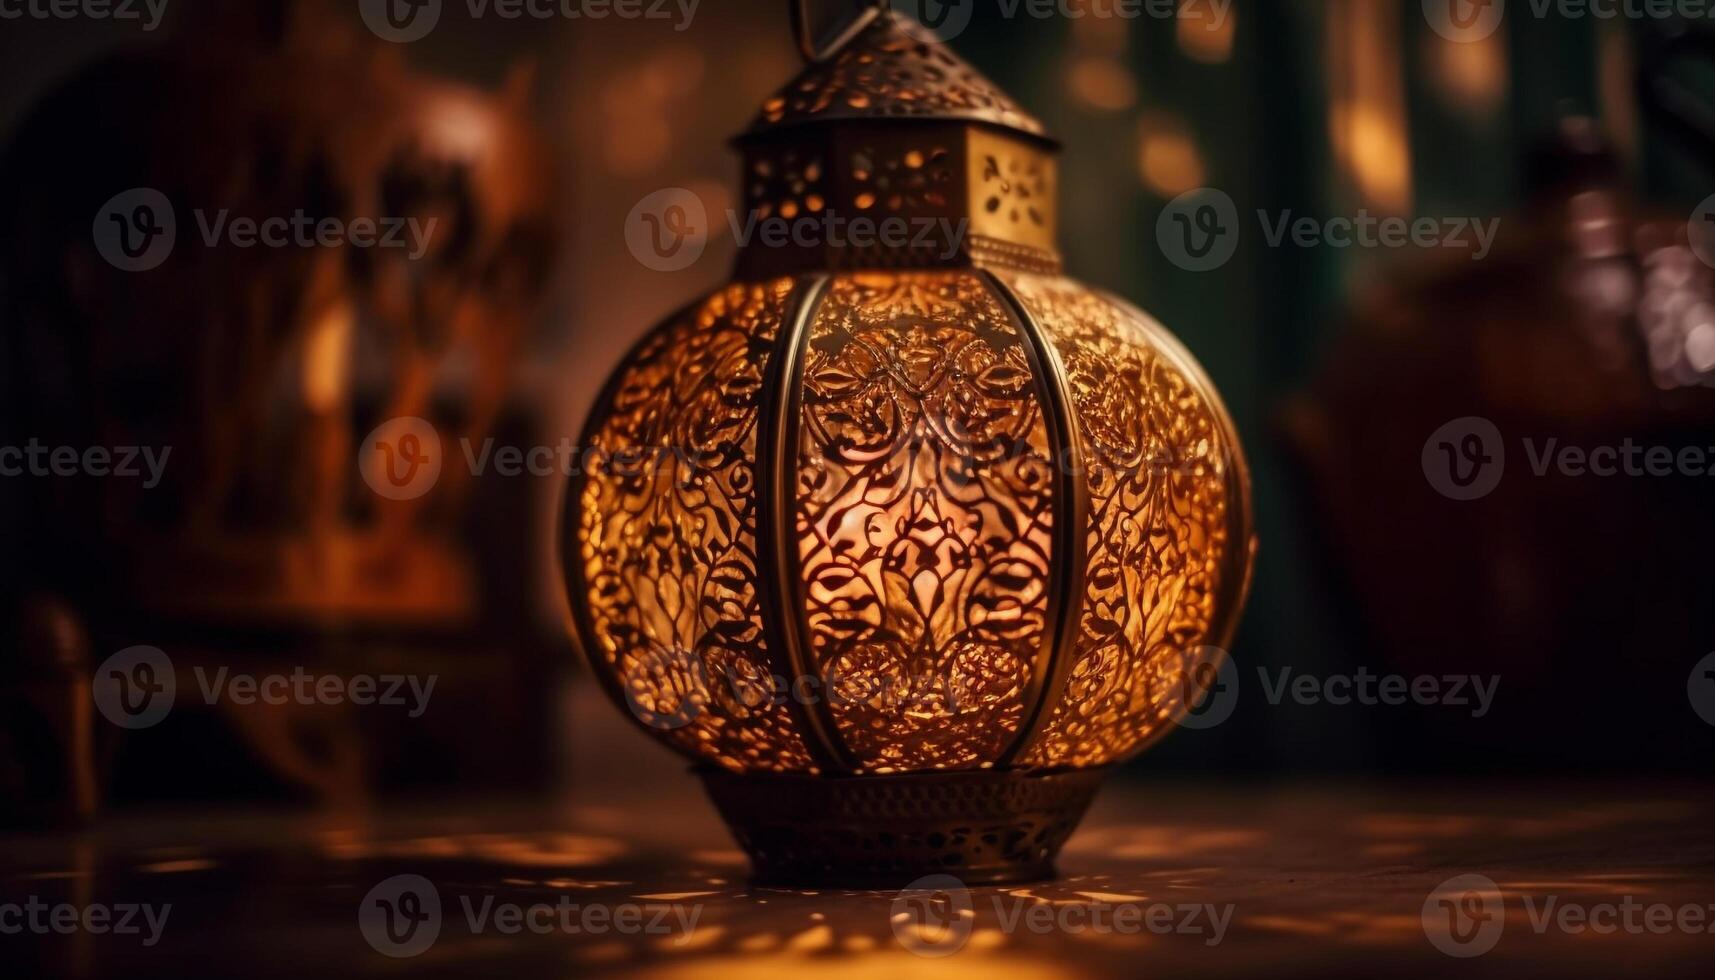 An antique lantern, illuminated a Turkish souvenir generated by AI photo